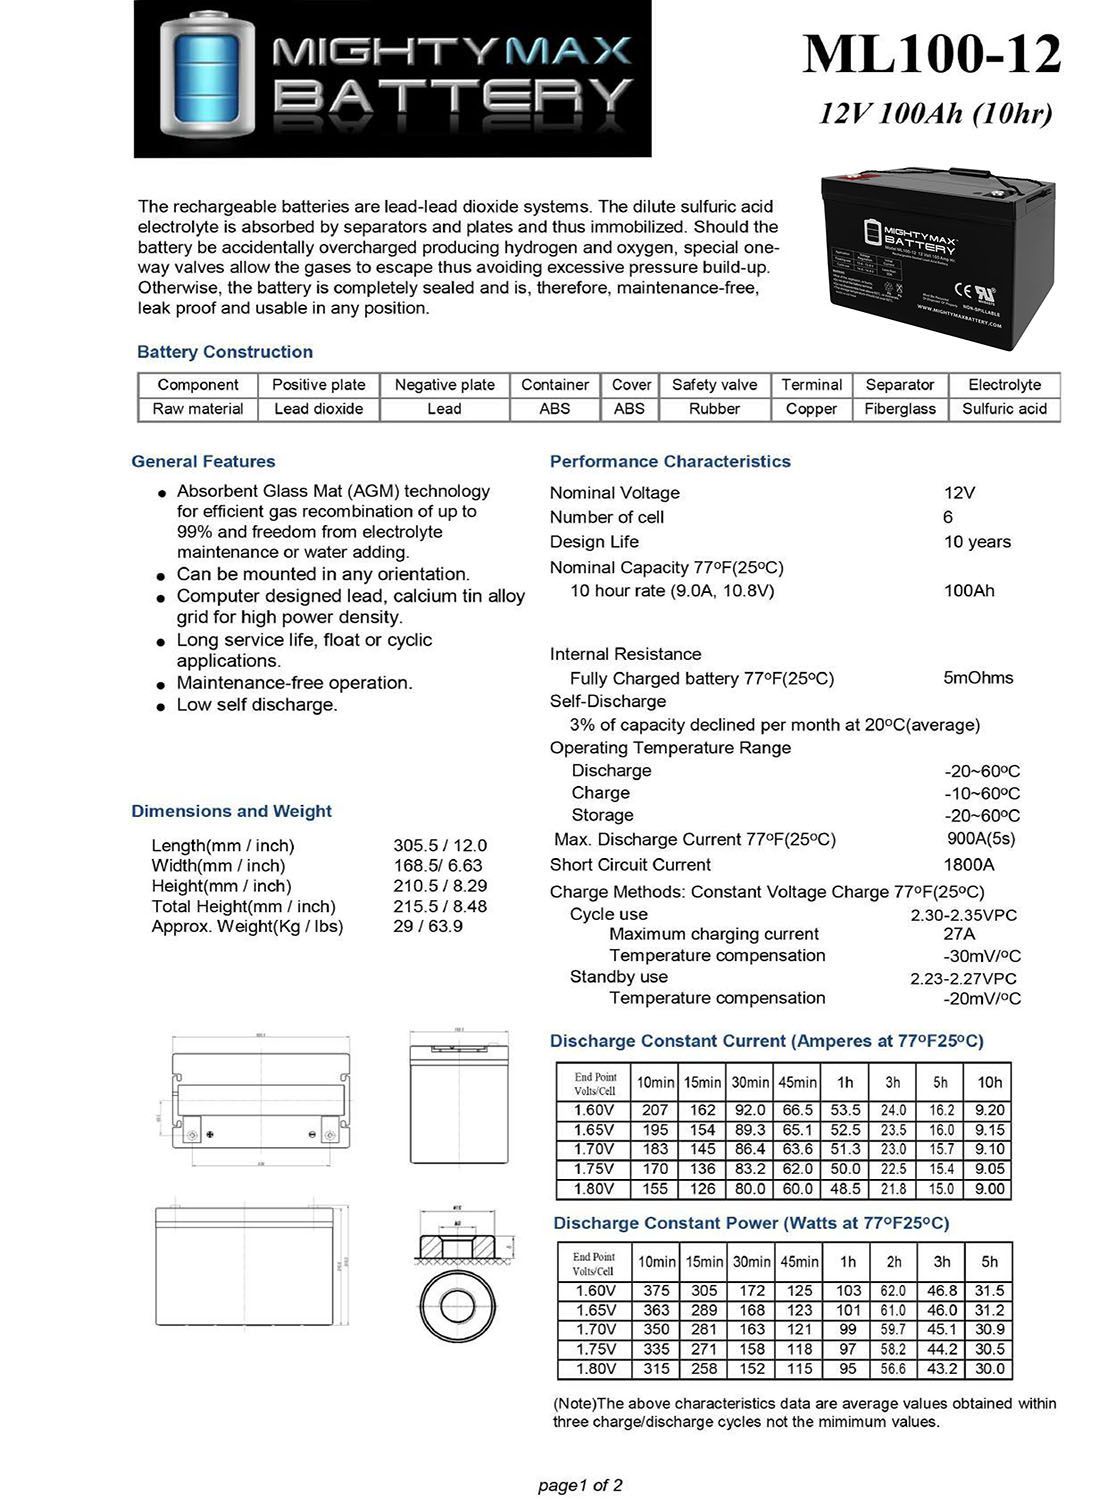 GoldMax AGM 12V 100Ah C100 Solarbatterie